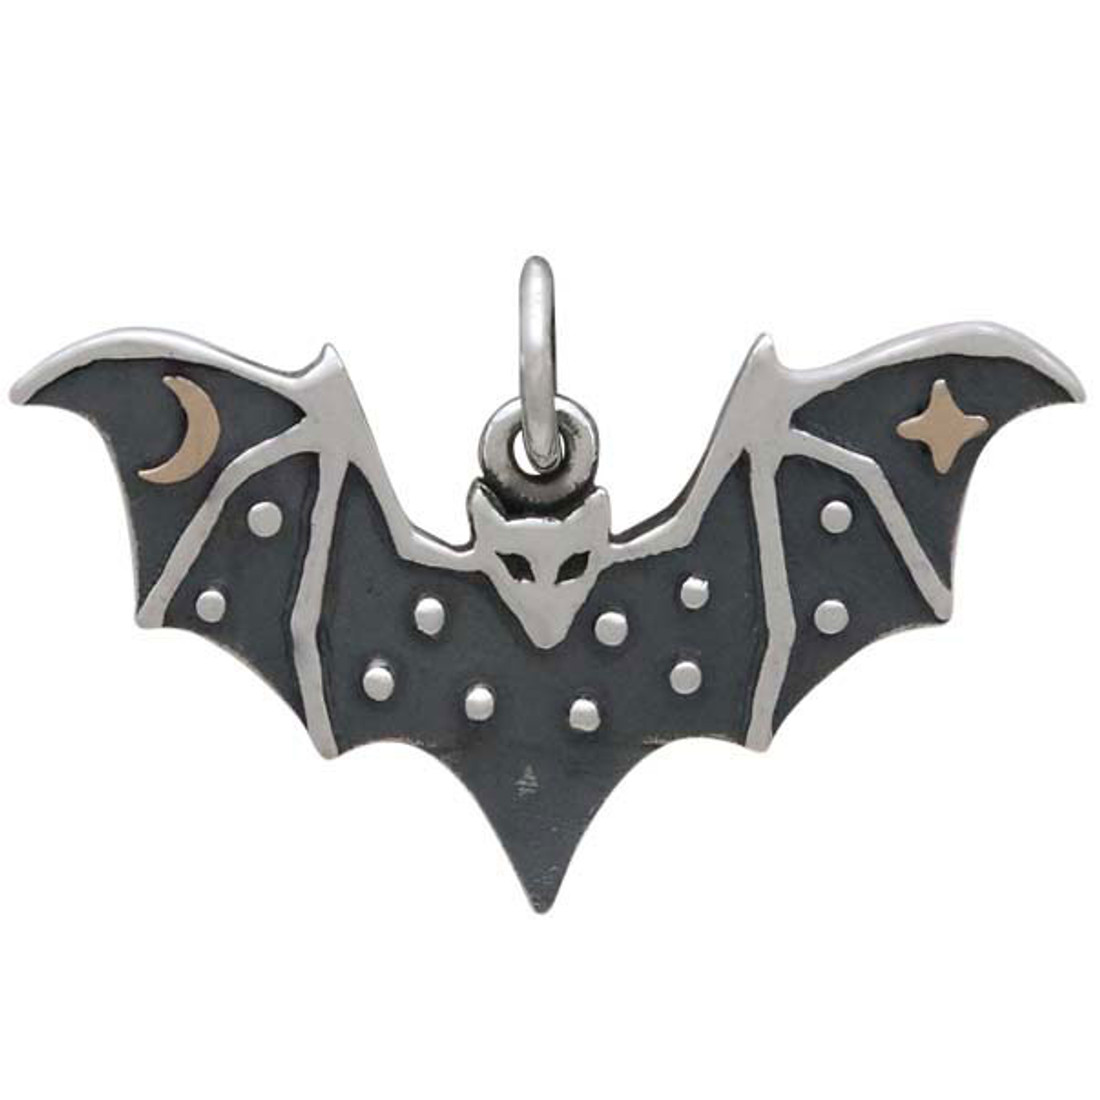 Small sterling silver bat charm pendant.  